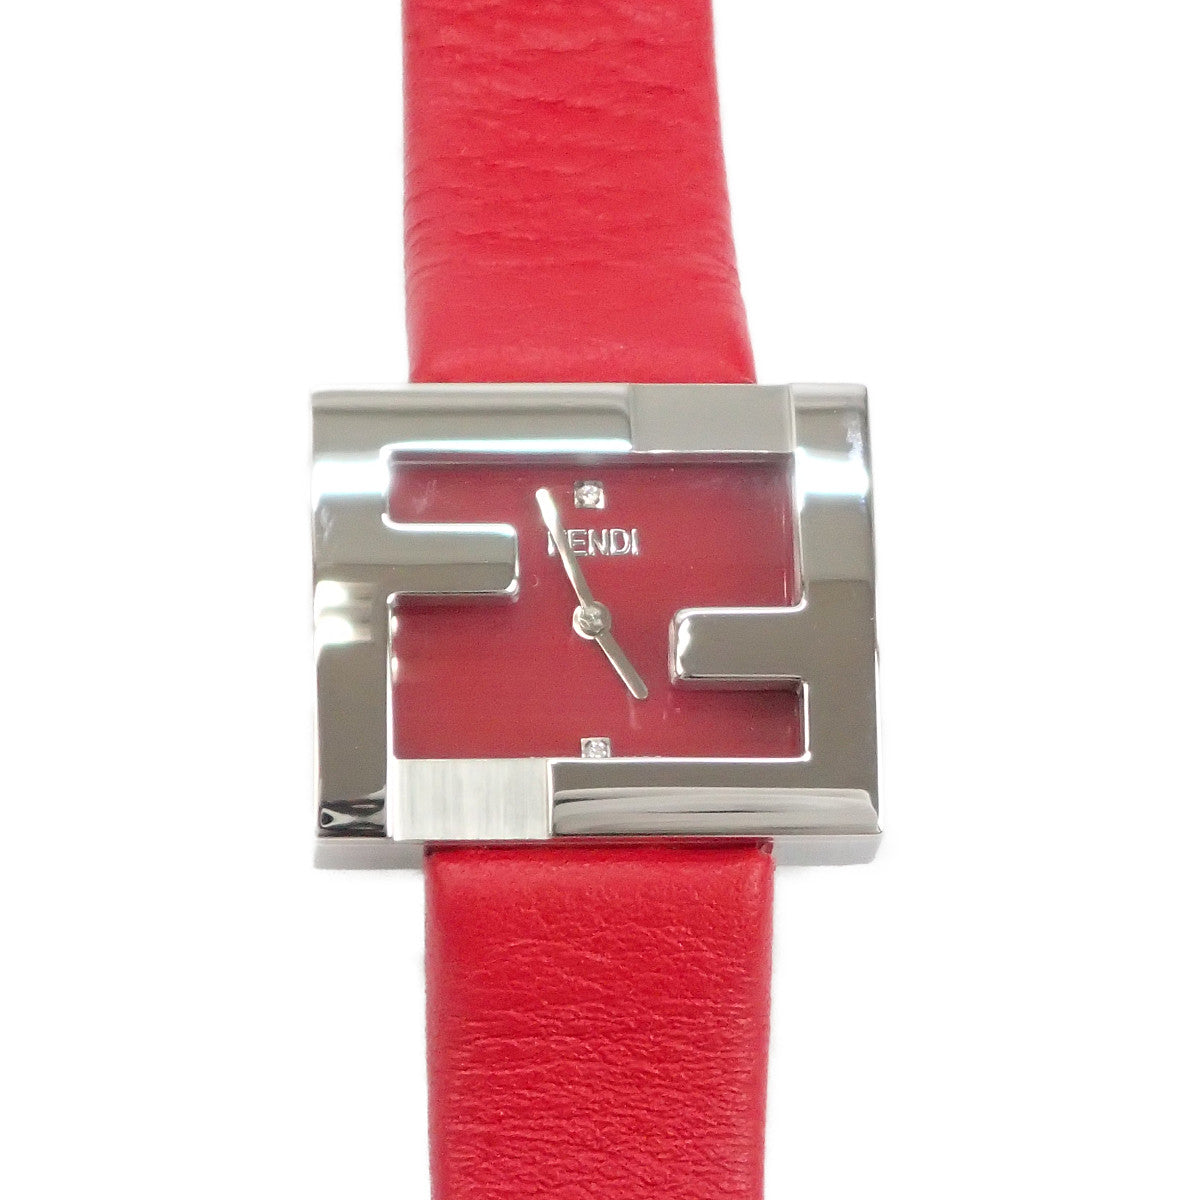 Fendi Quartz FendiMania Wrist Watch Leather Quartz FOW850A2YAF0C0U in Excellent condition